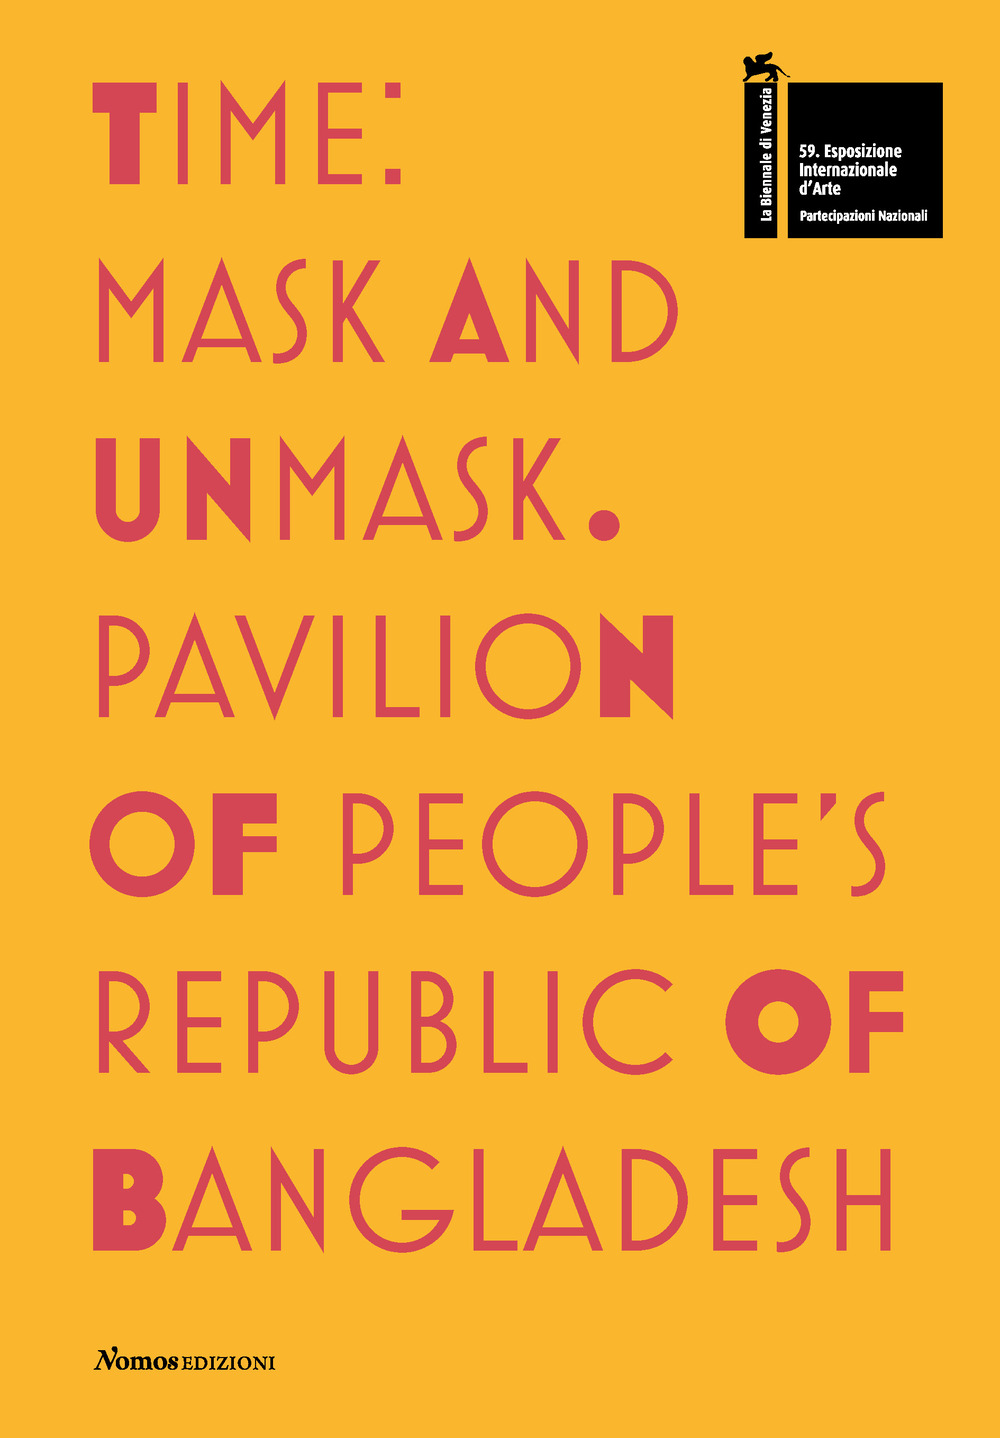 Time. Mask and unmask. Pavilion of people's Republic of Bangladesh. 59ª Biennale di Venezia. Ediz. illustrata